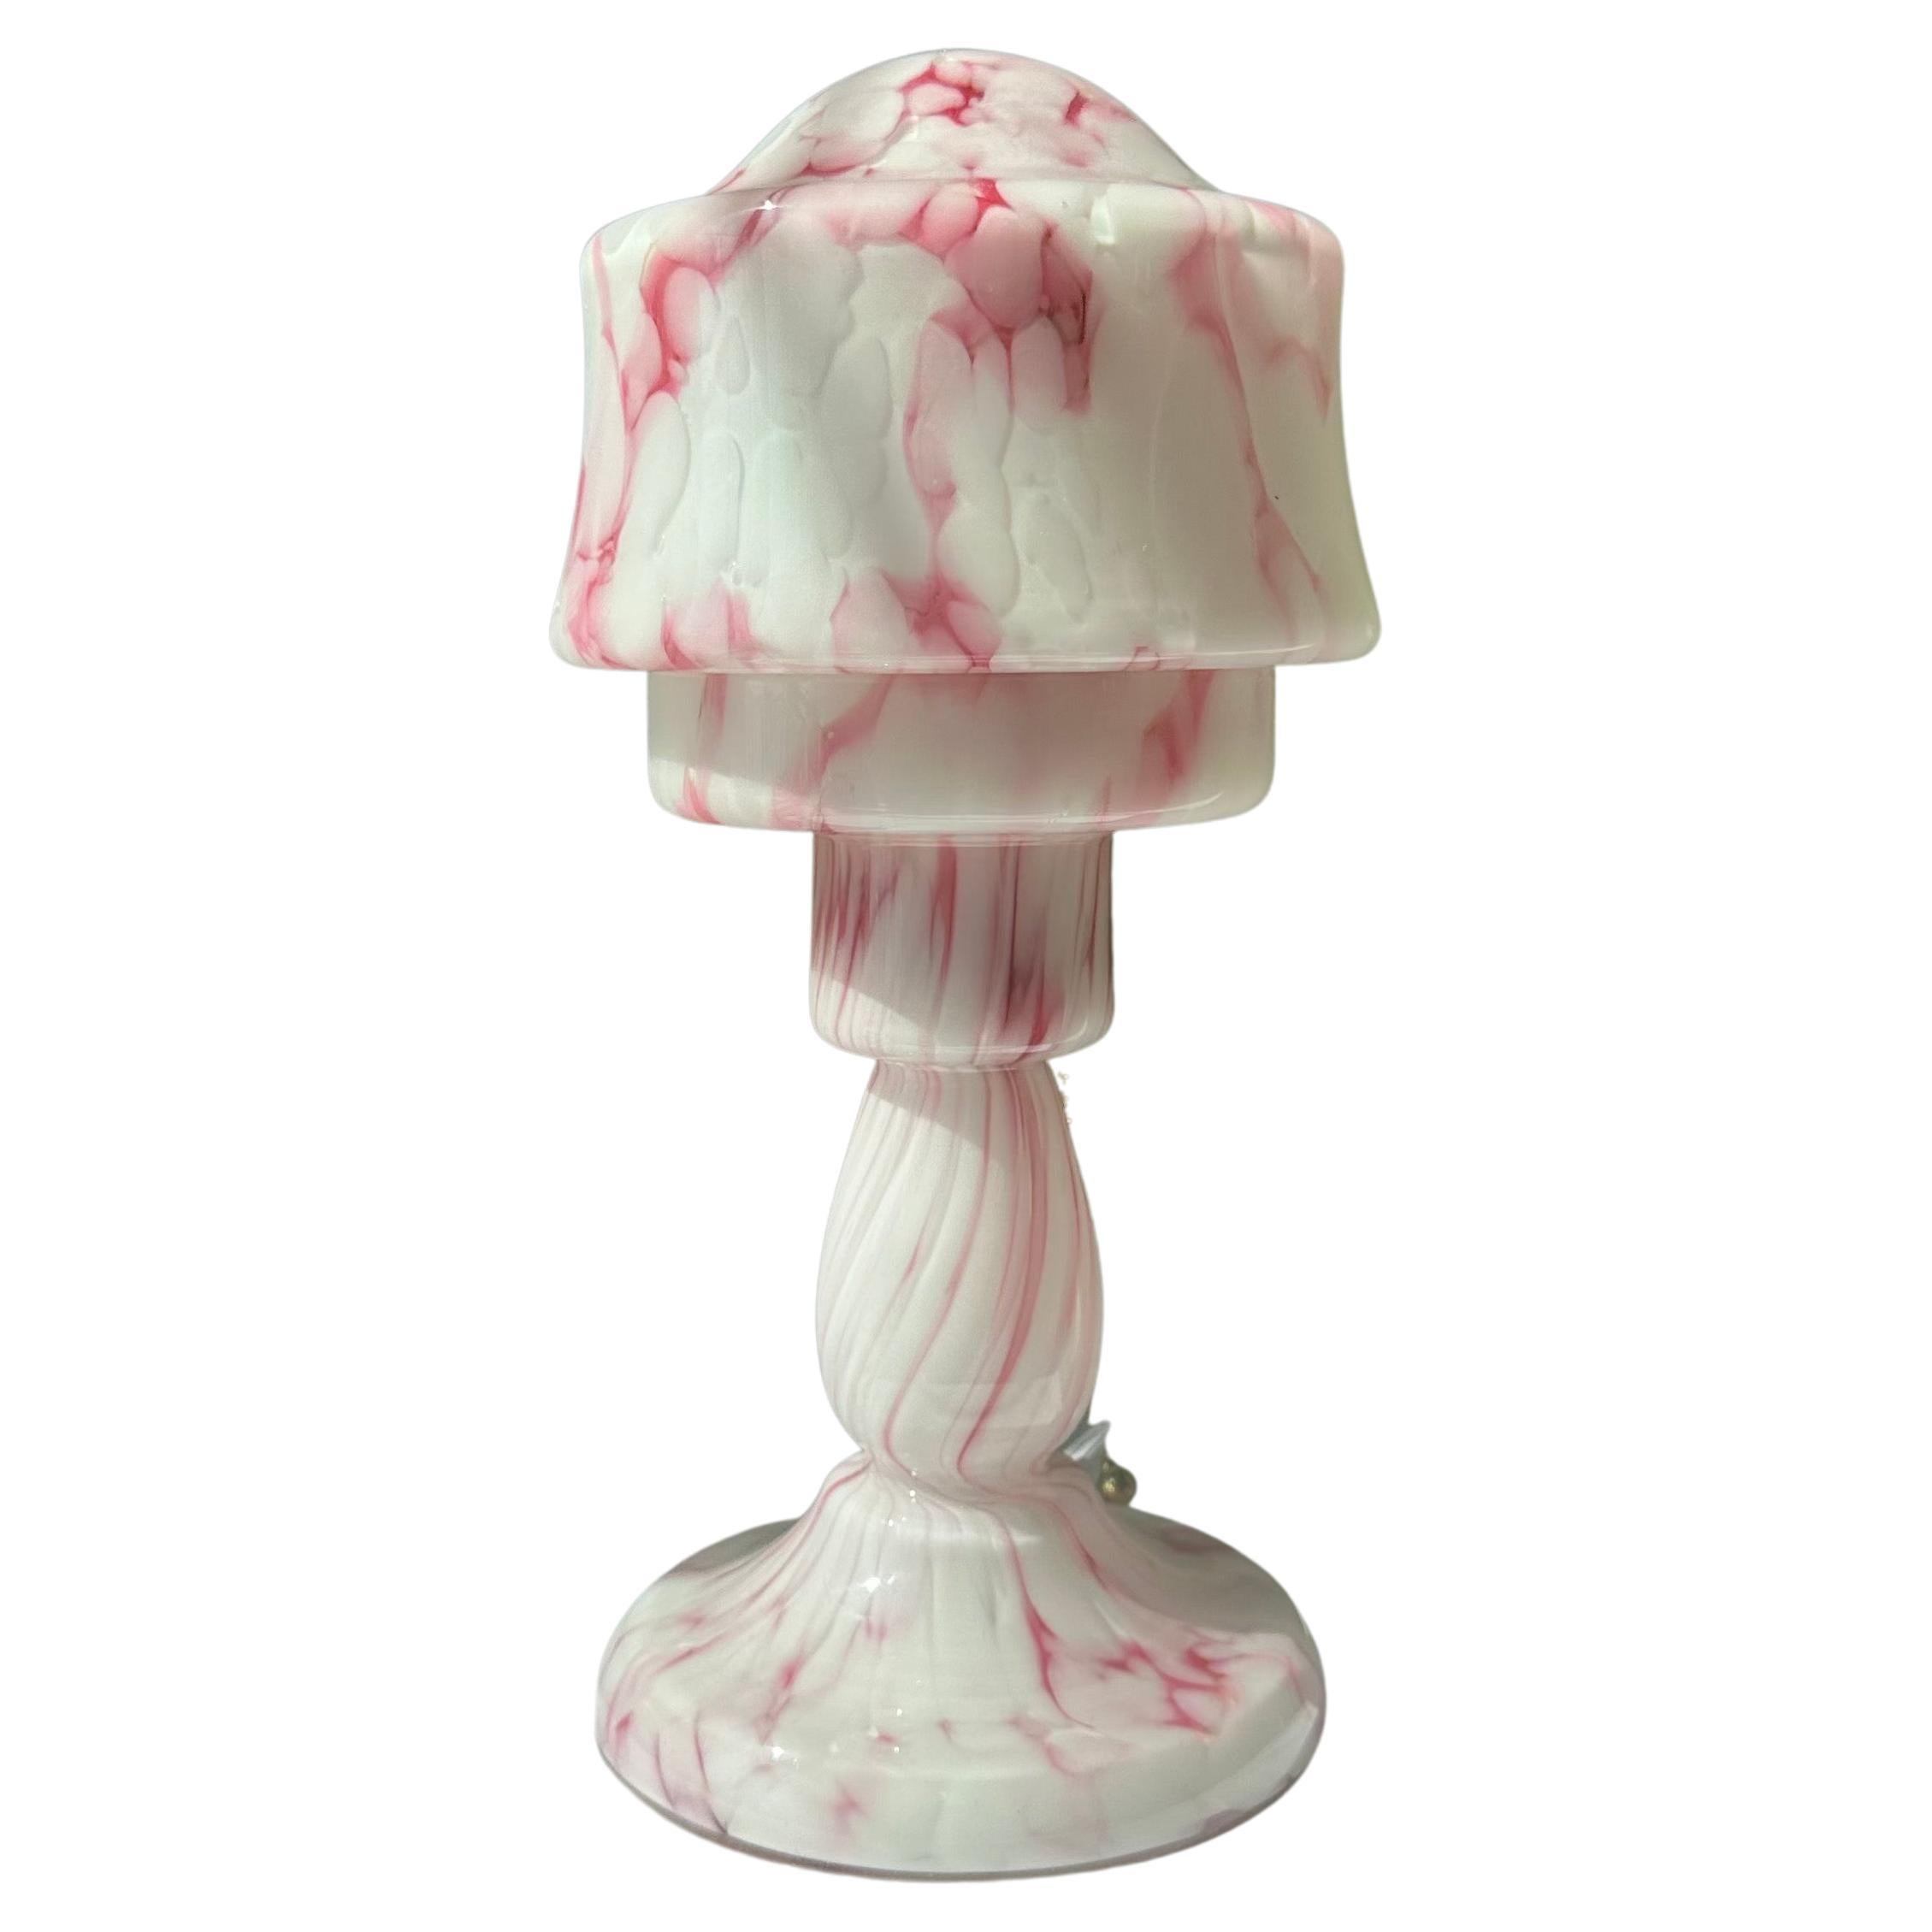 Pink and White Modernist Art Deco Glass Mushroom Table Lamp